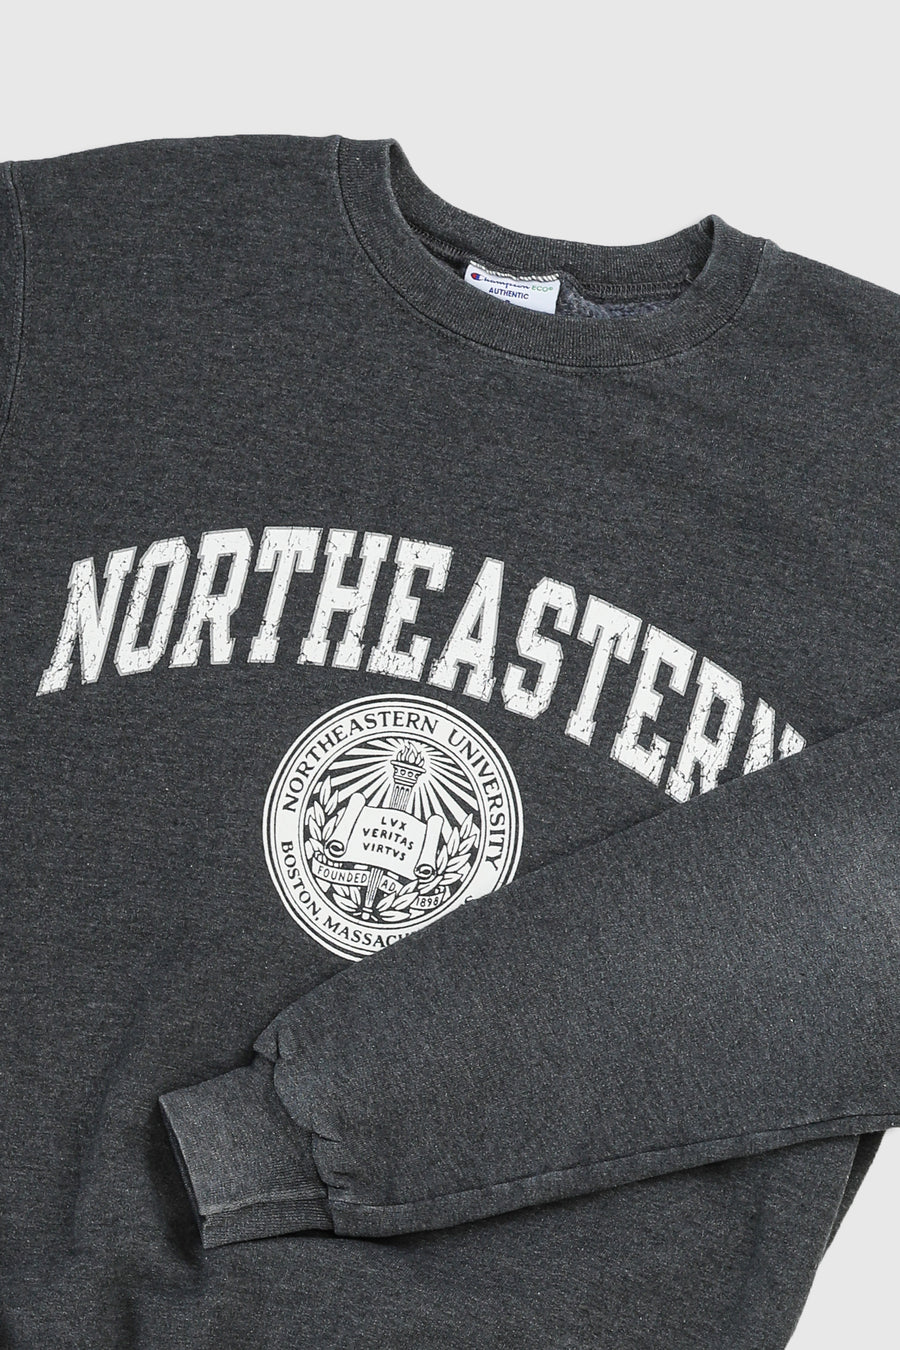 Vintage Northeastern University Sweatshirt - S